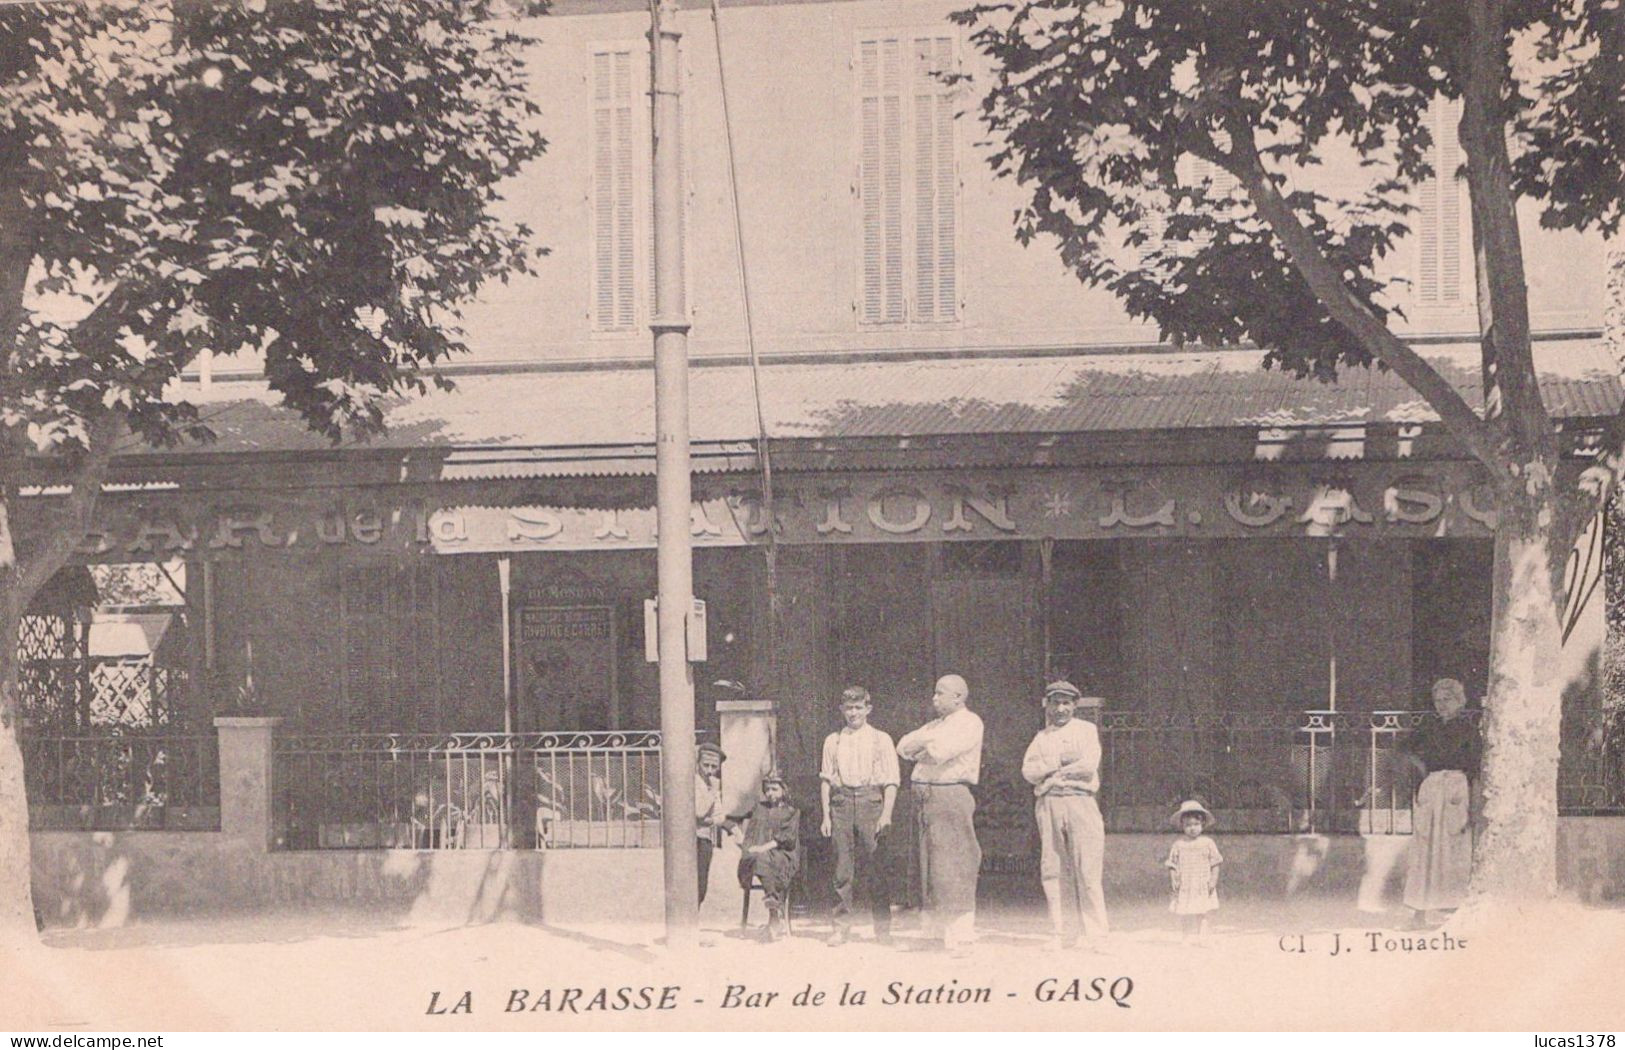 13 / MARSEILLE / LA BARASSE / BAR DE LA STATION / GASQ - Saint Marcel, La Barasse, Saint Menet